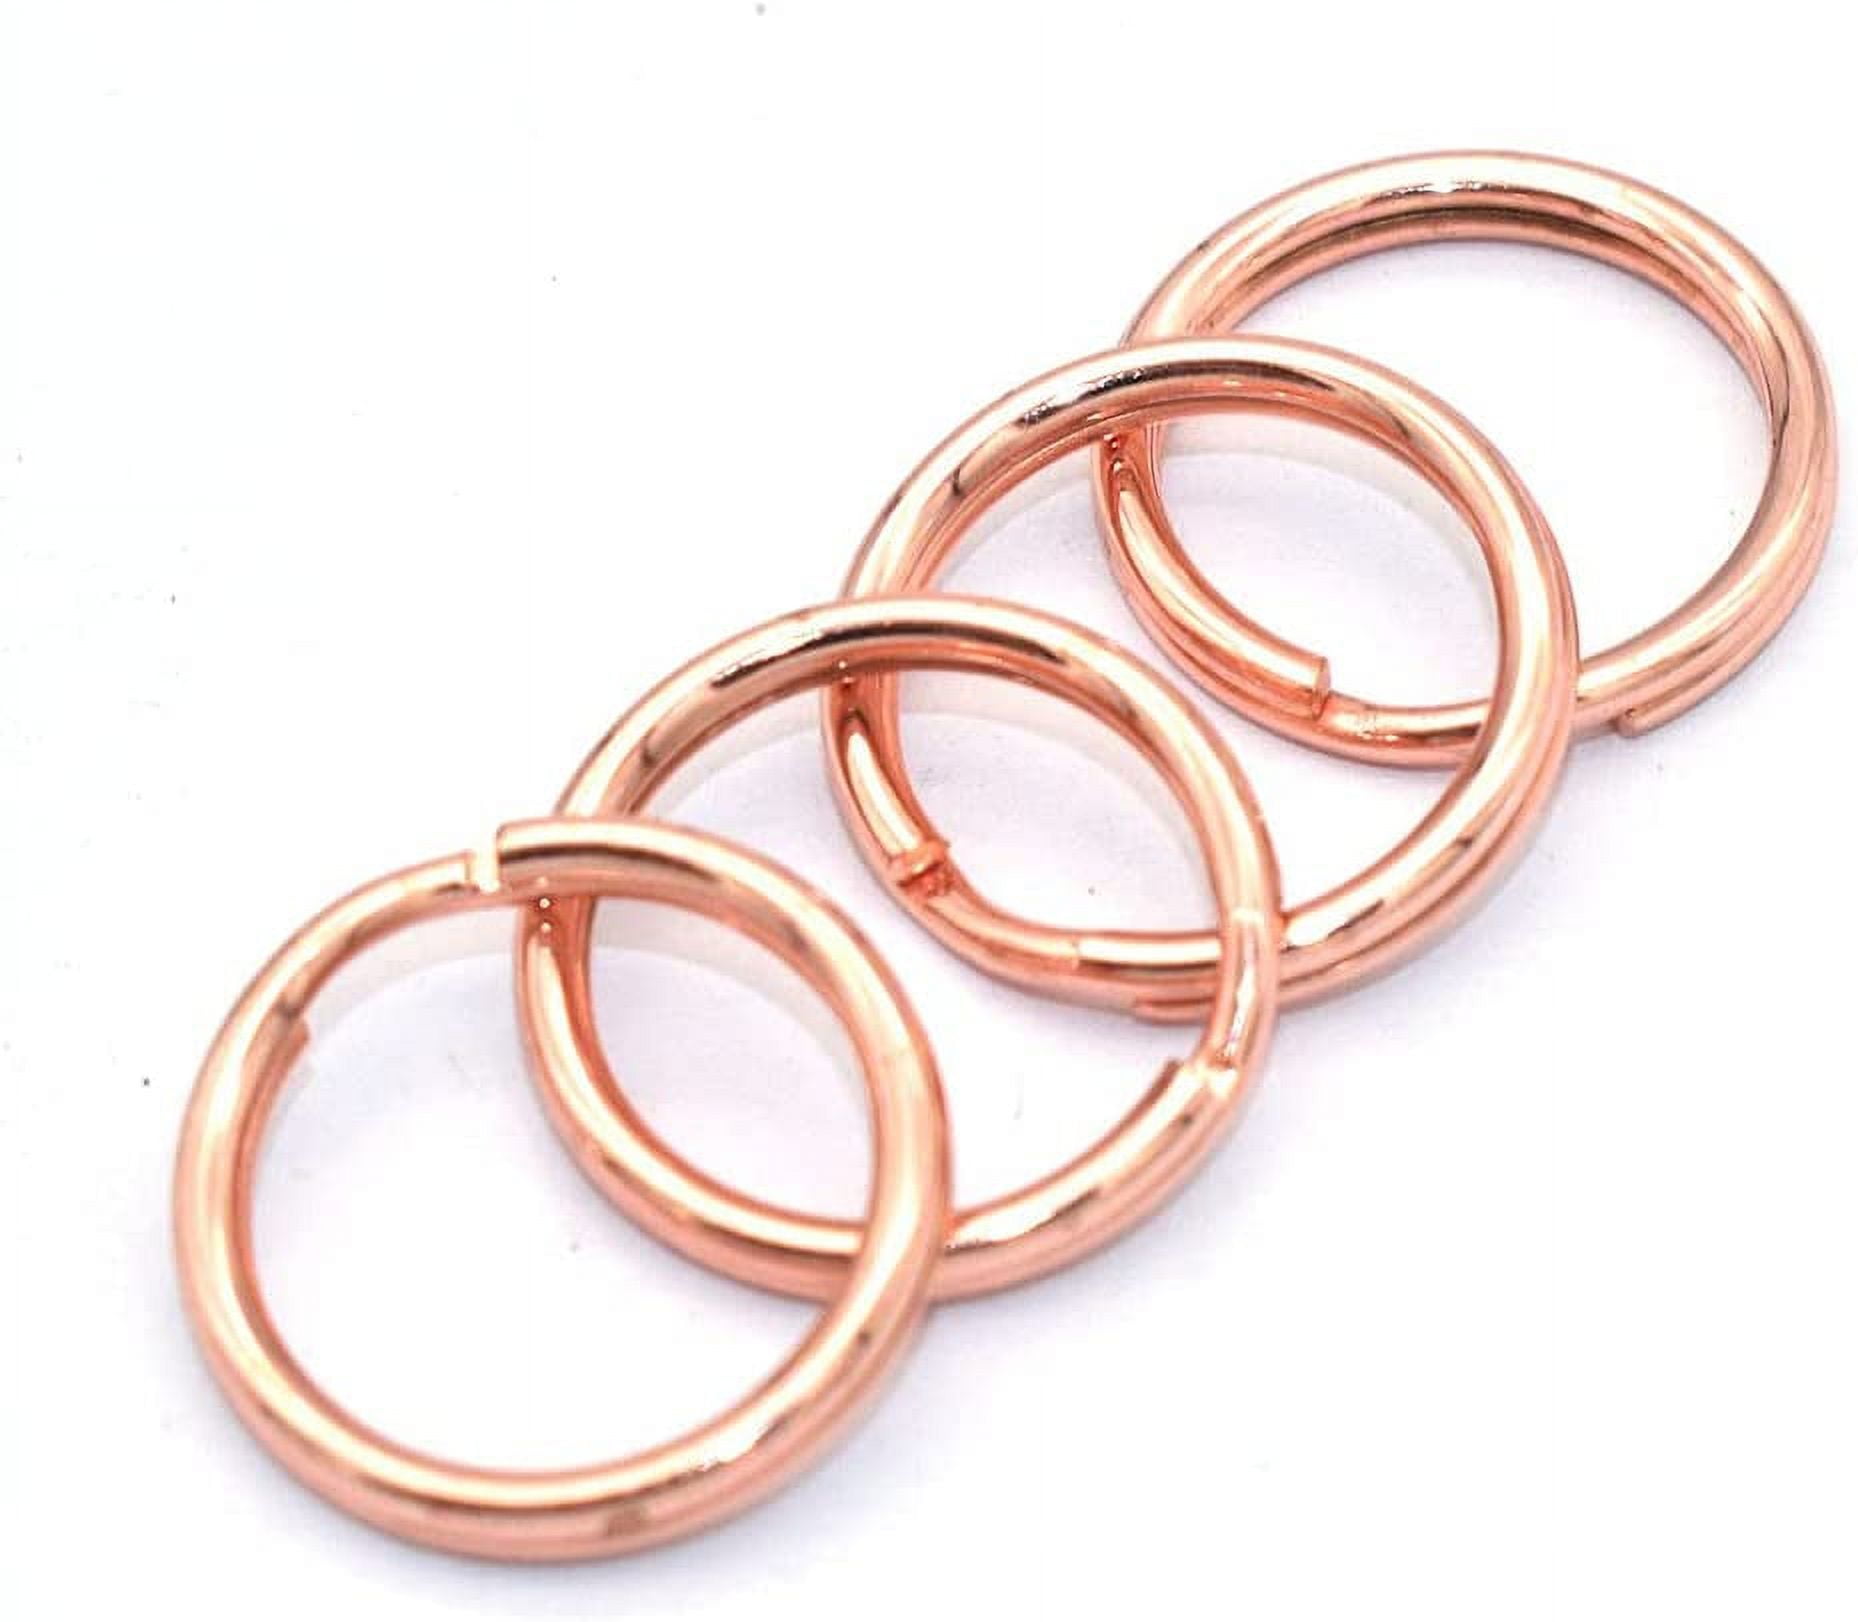 50 pcs Metal Rose Gold Key Rings,Keychain Connectors Jump Rings